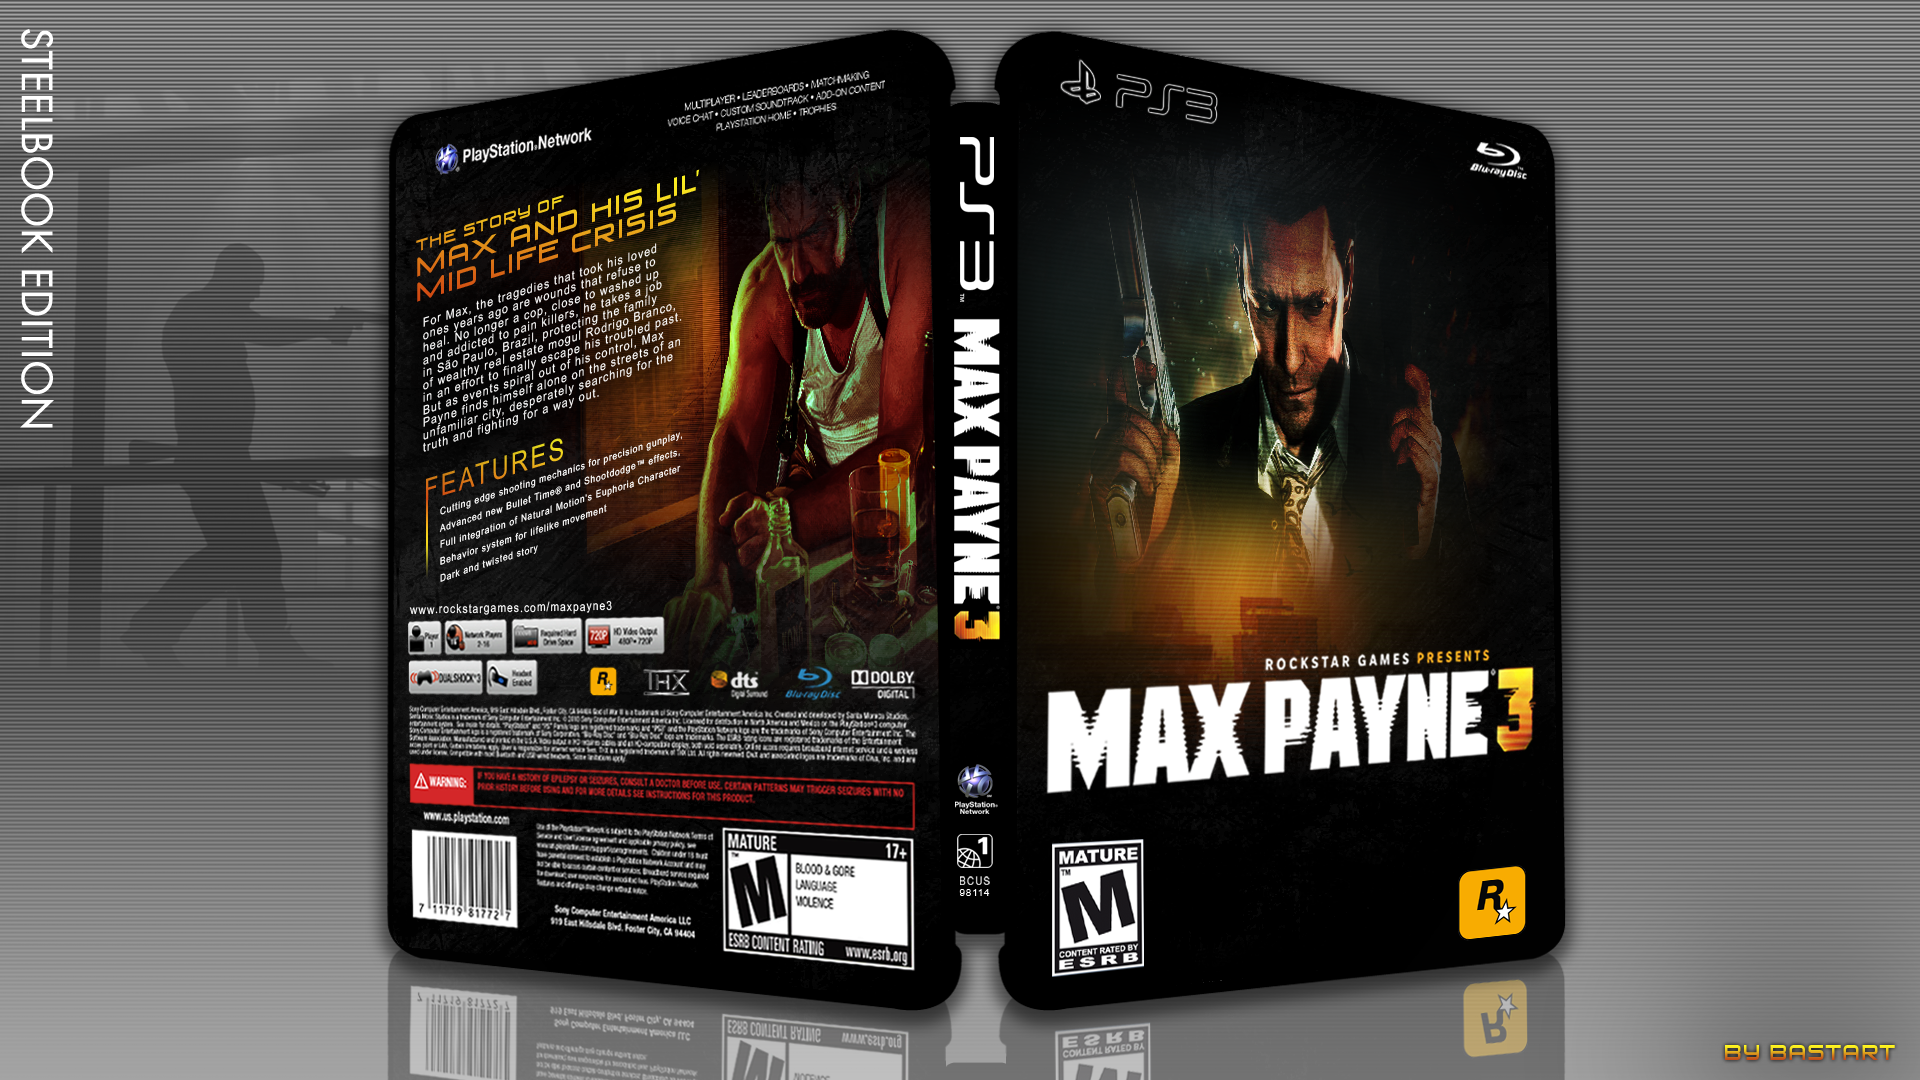 Max Payne 3 (steelbook edition) box cover